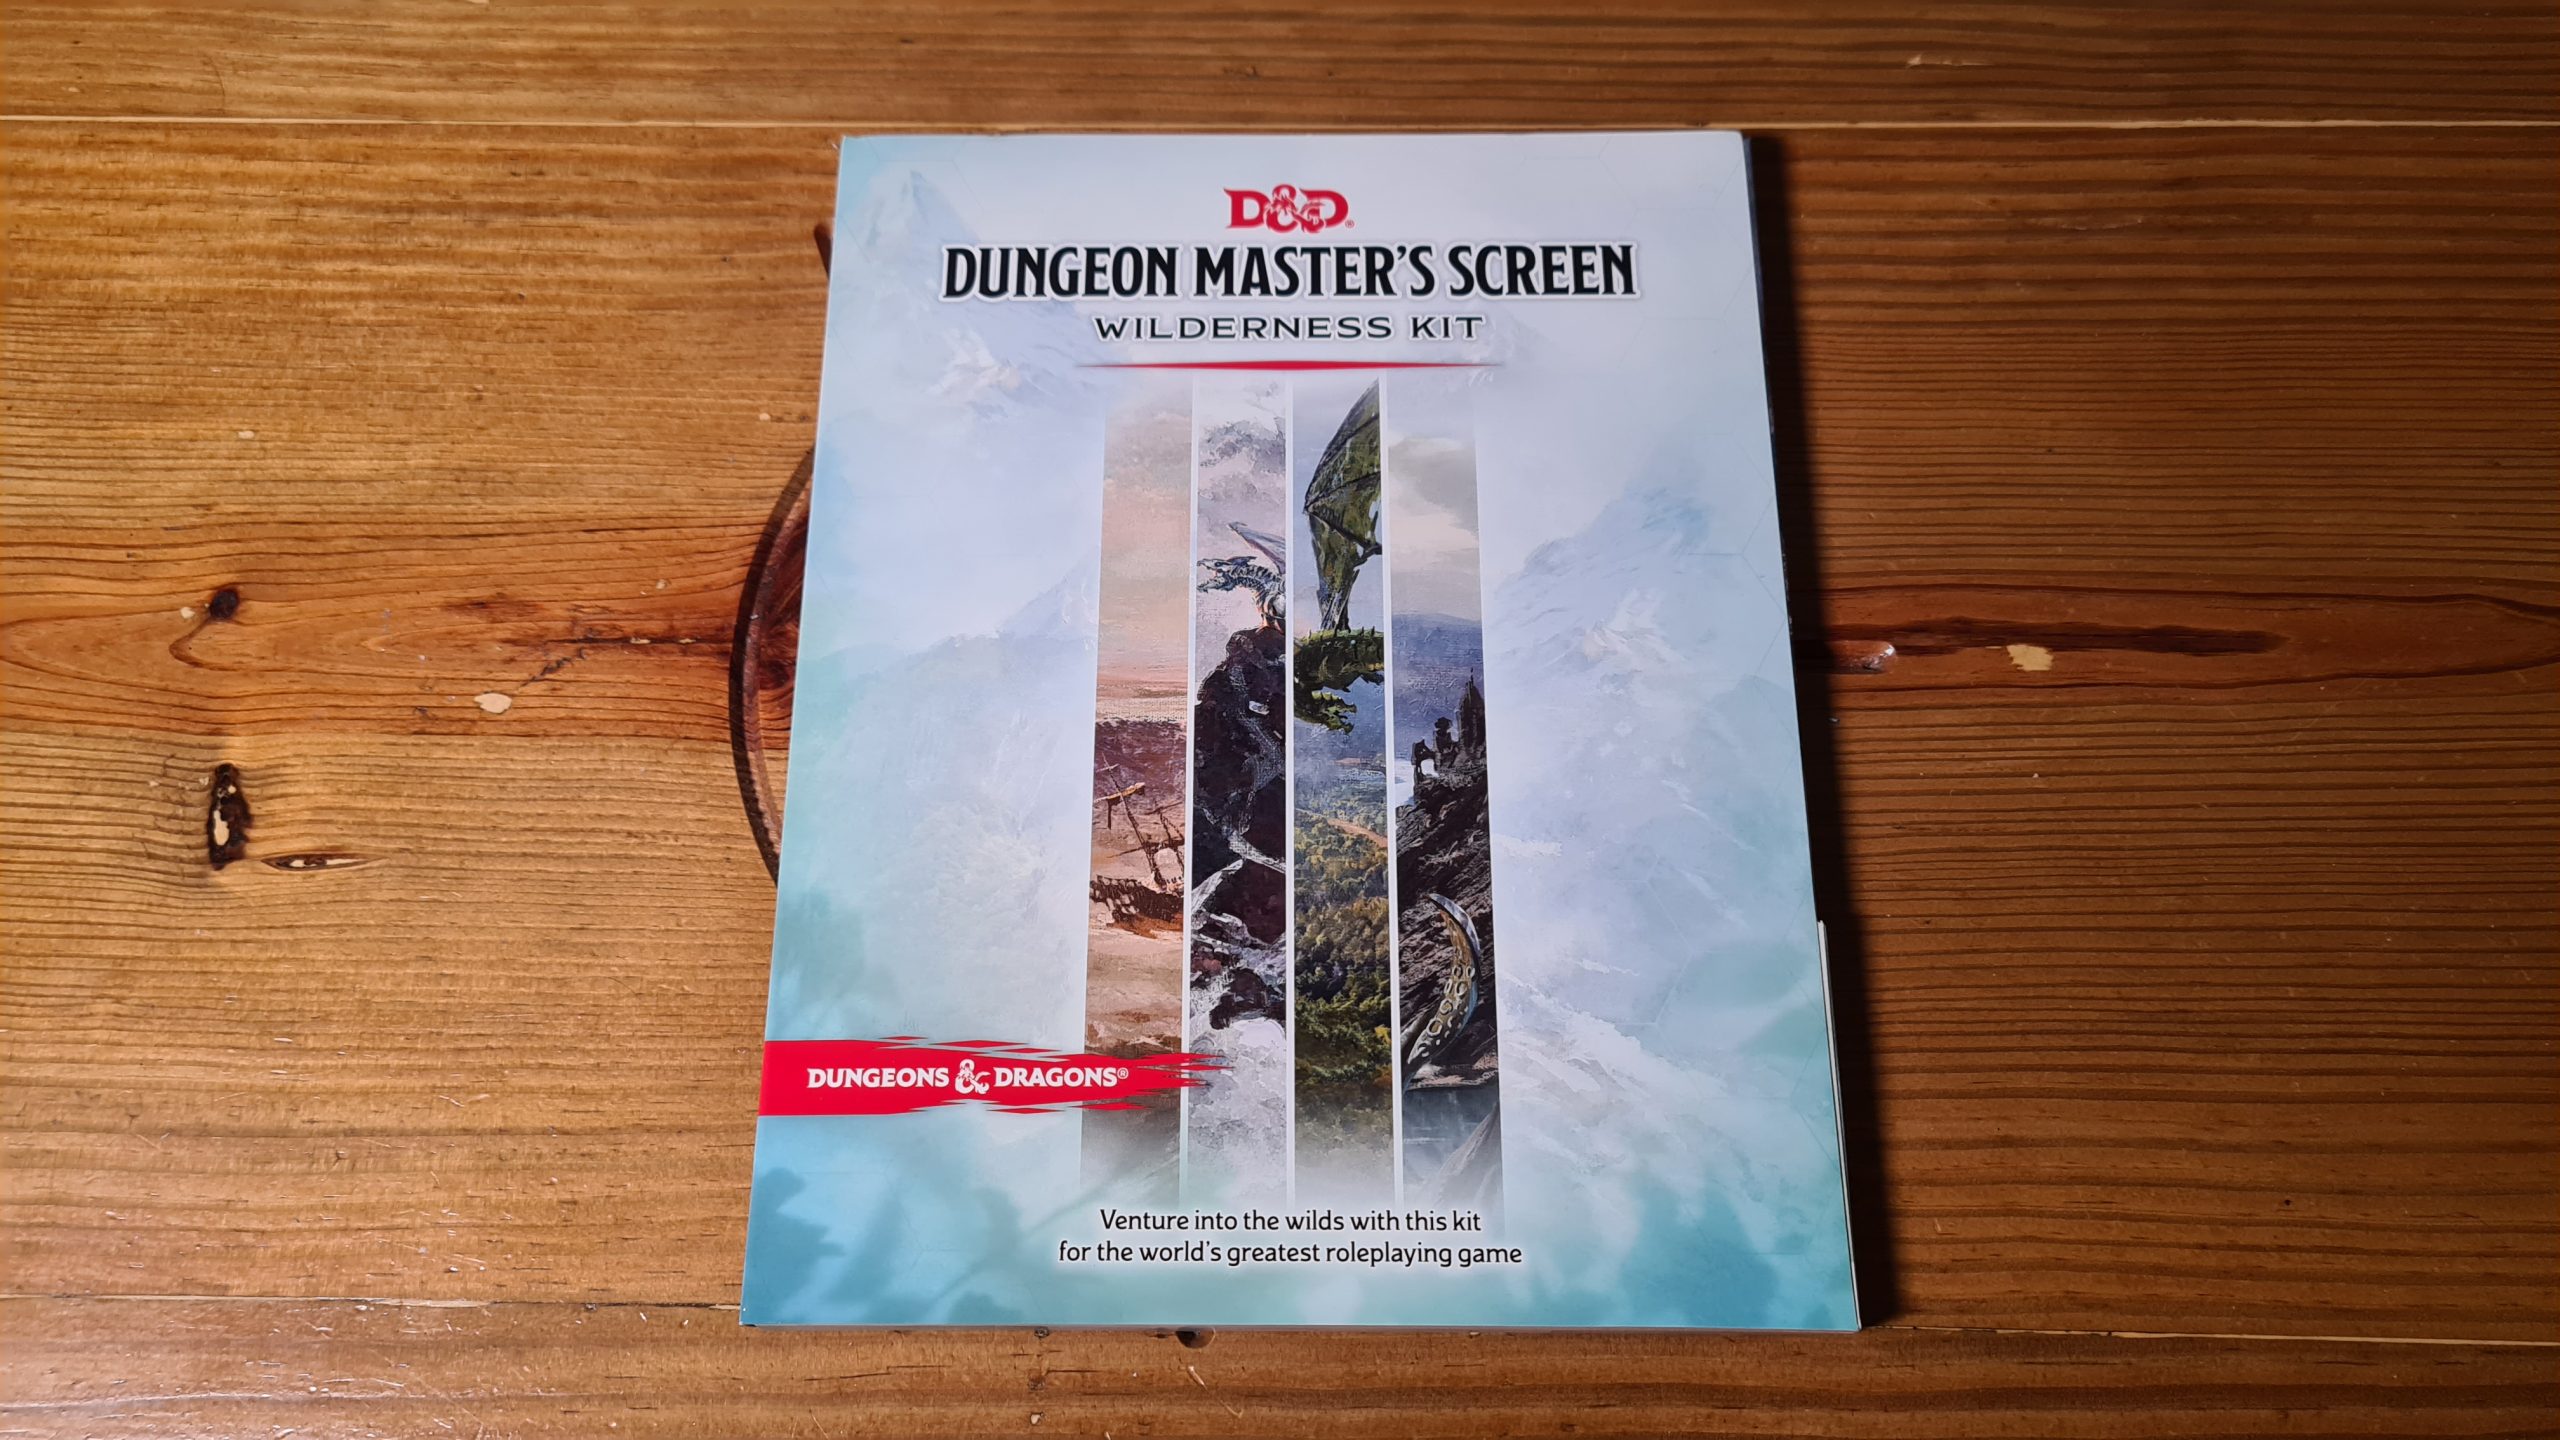 D&D: Dungeon Master’s Screen Wilderness Kit Review